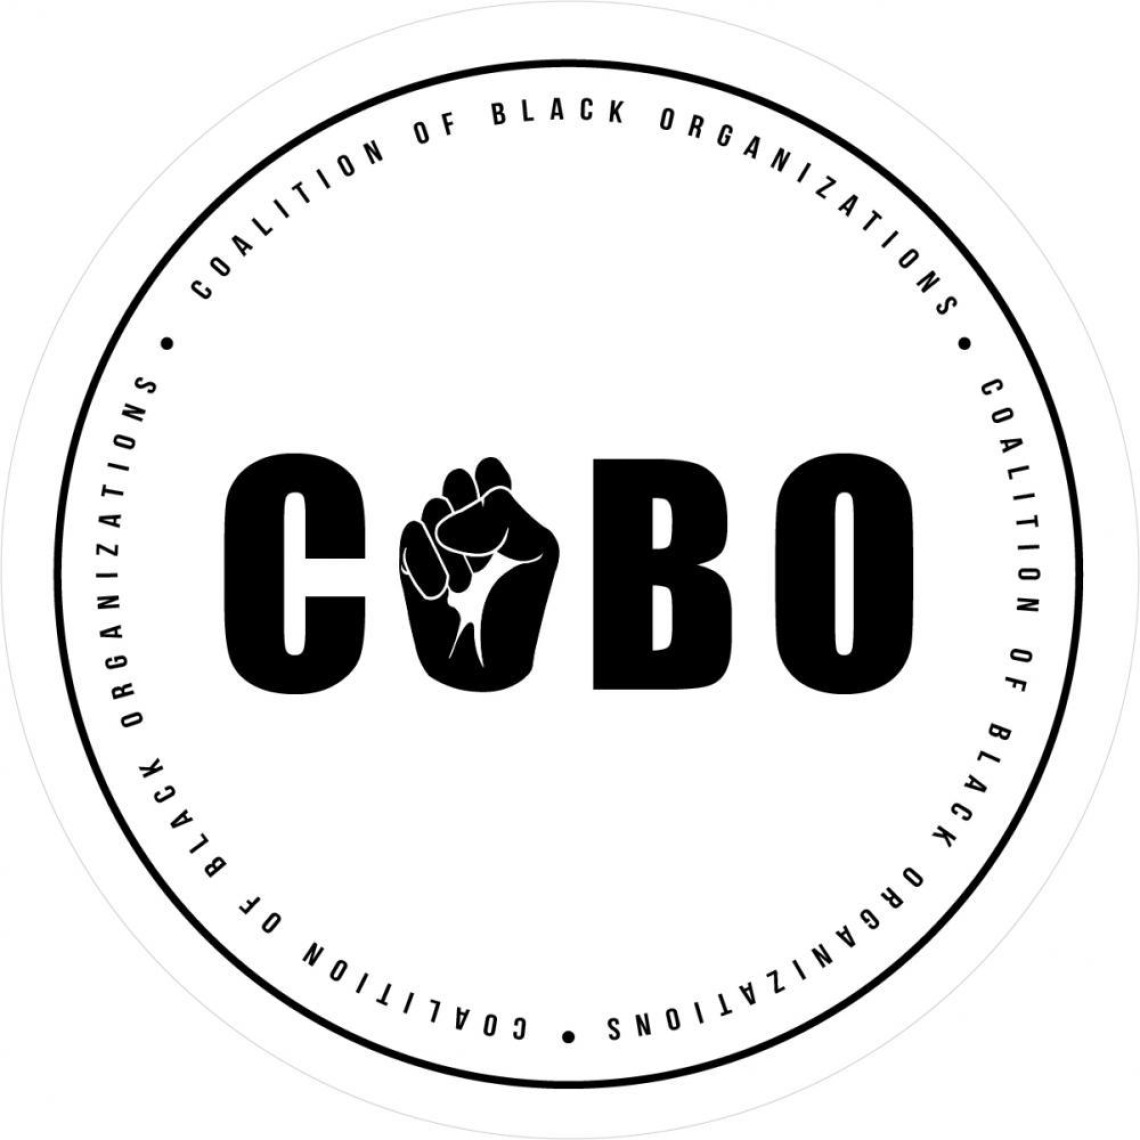 Coalition of Black Organizations (COBO)